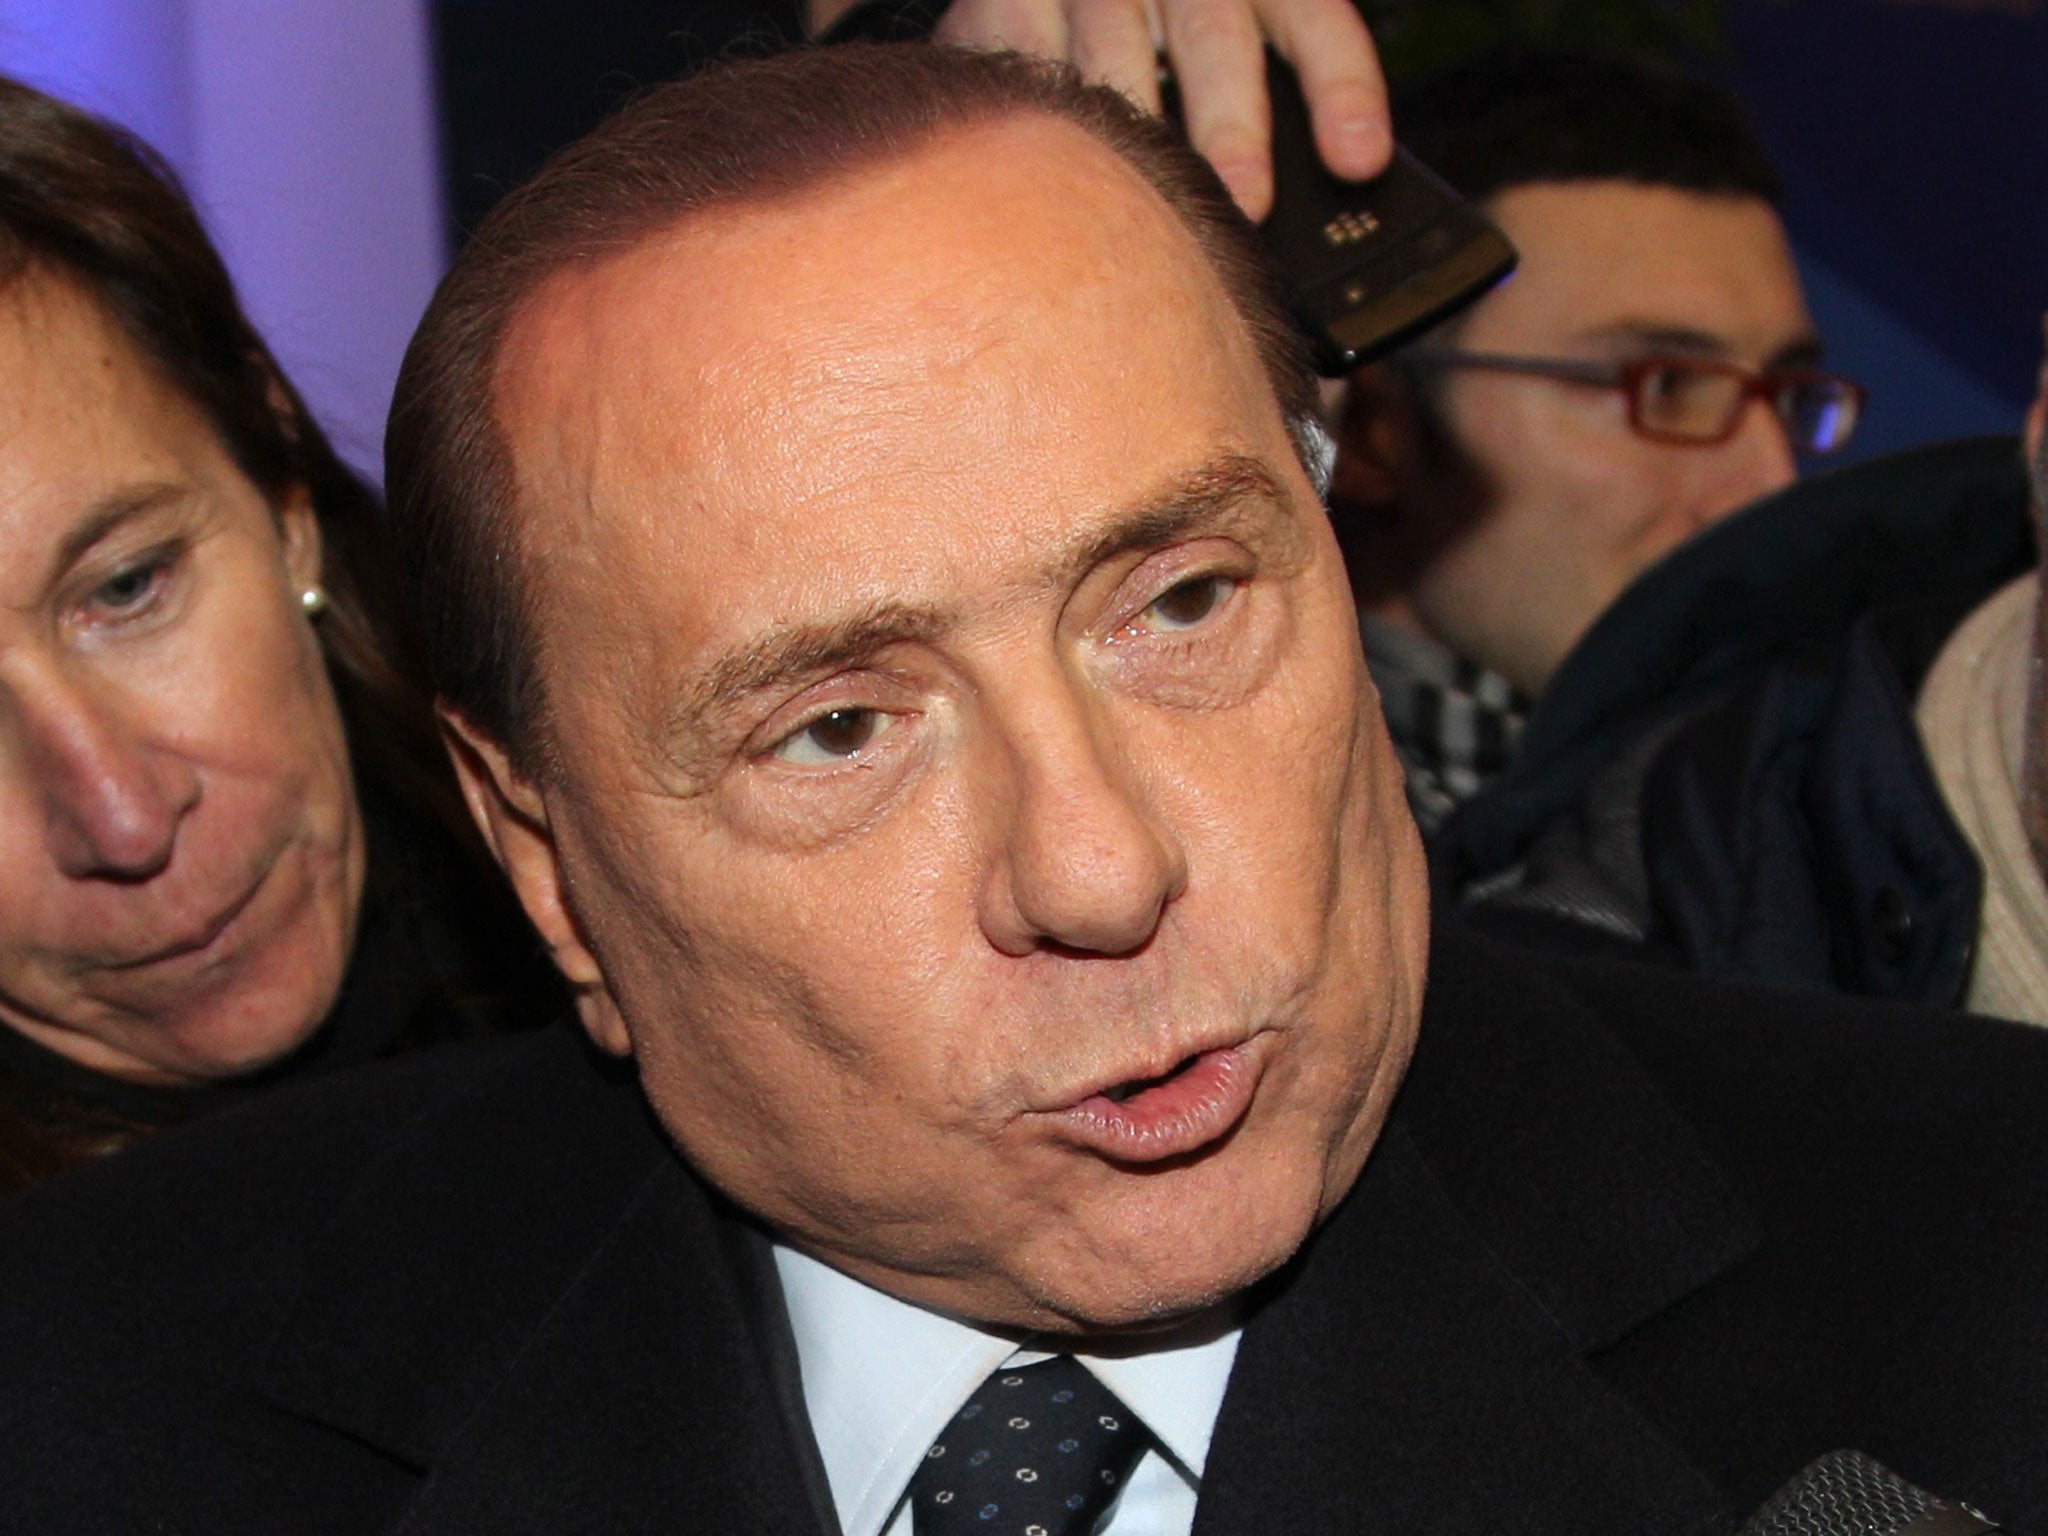 Silvio Berlusconi will fight Italy's coming general election